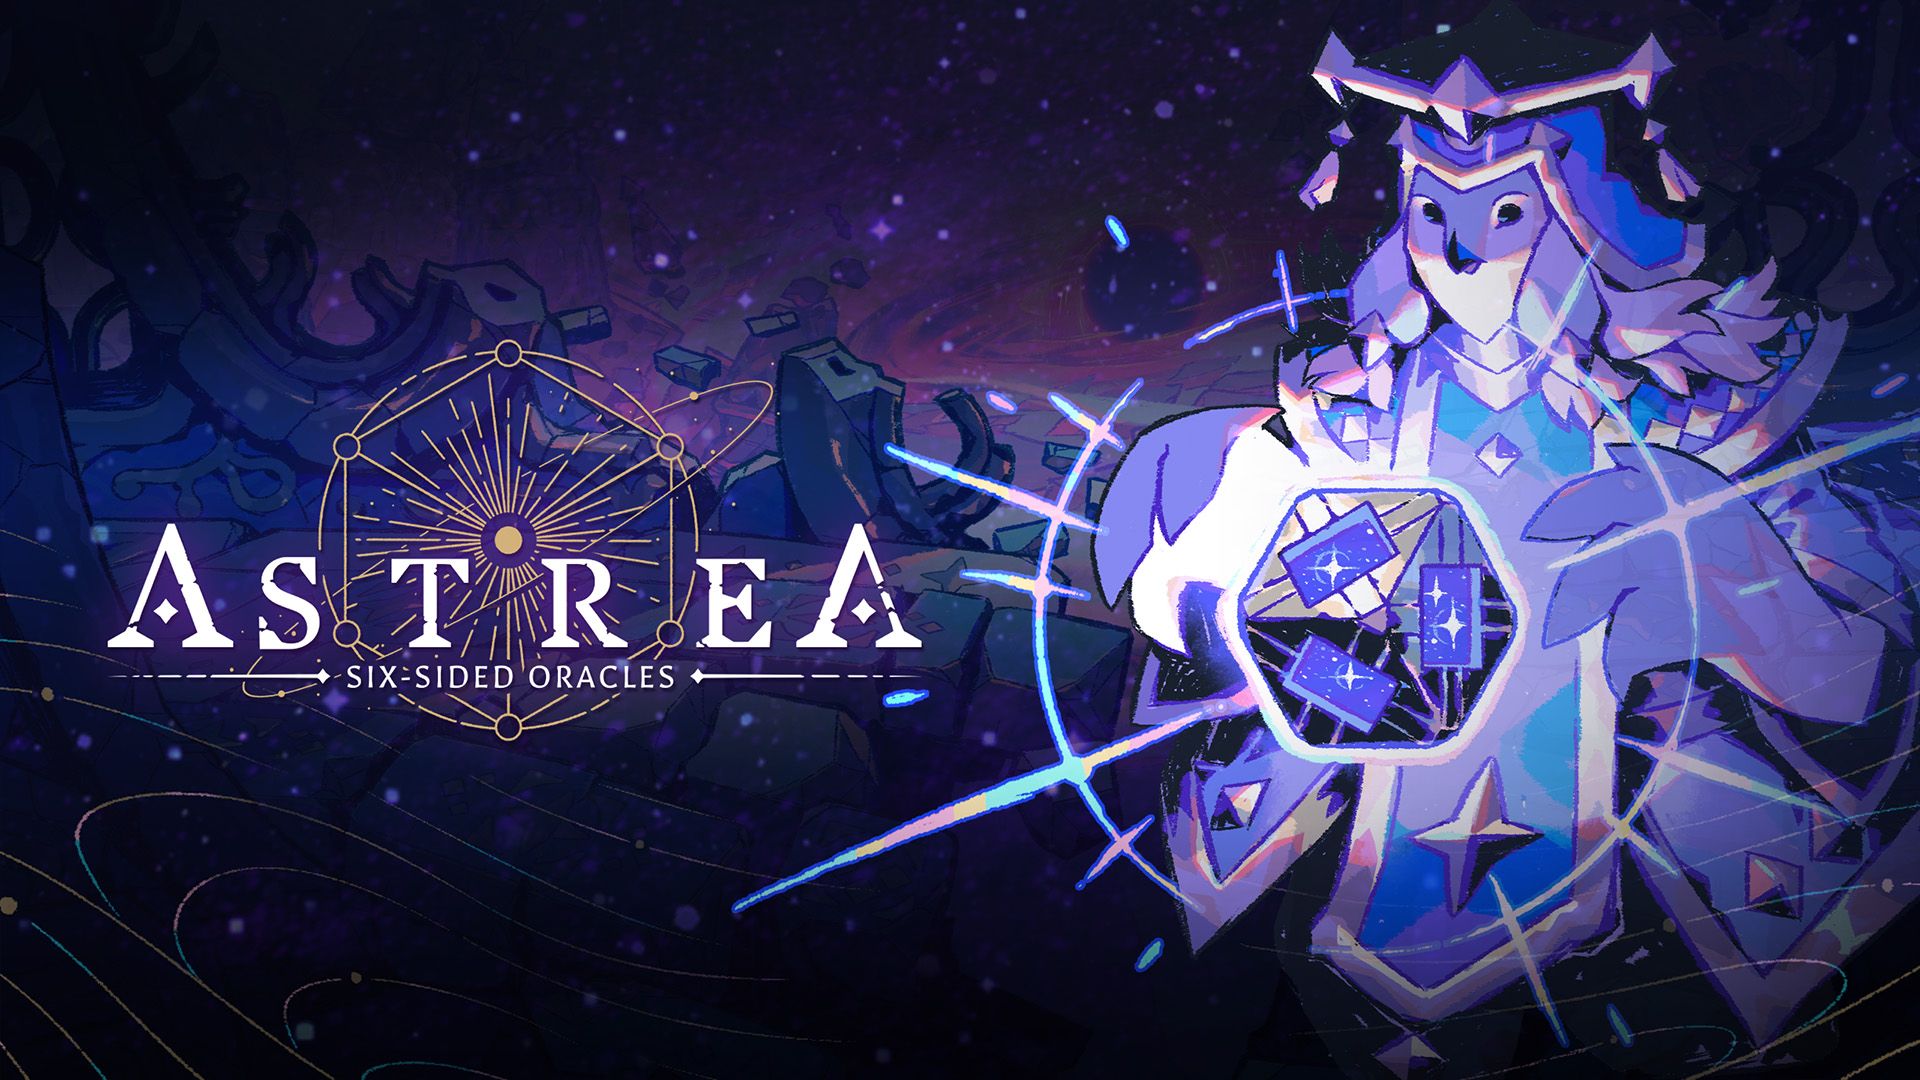 blog feature煌めく星の力を操作して運命を乗り越えよう！ ダイス構築型ローグライト『Astrea Six-Sided Oracles』